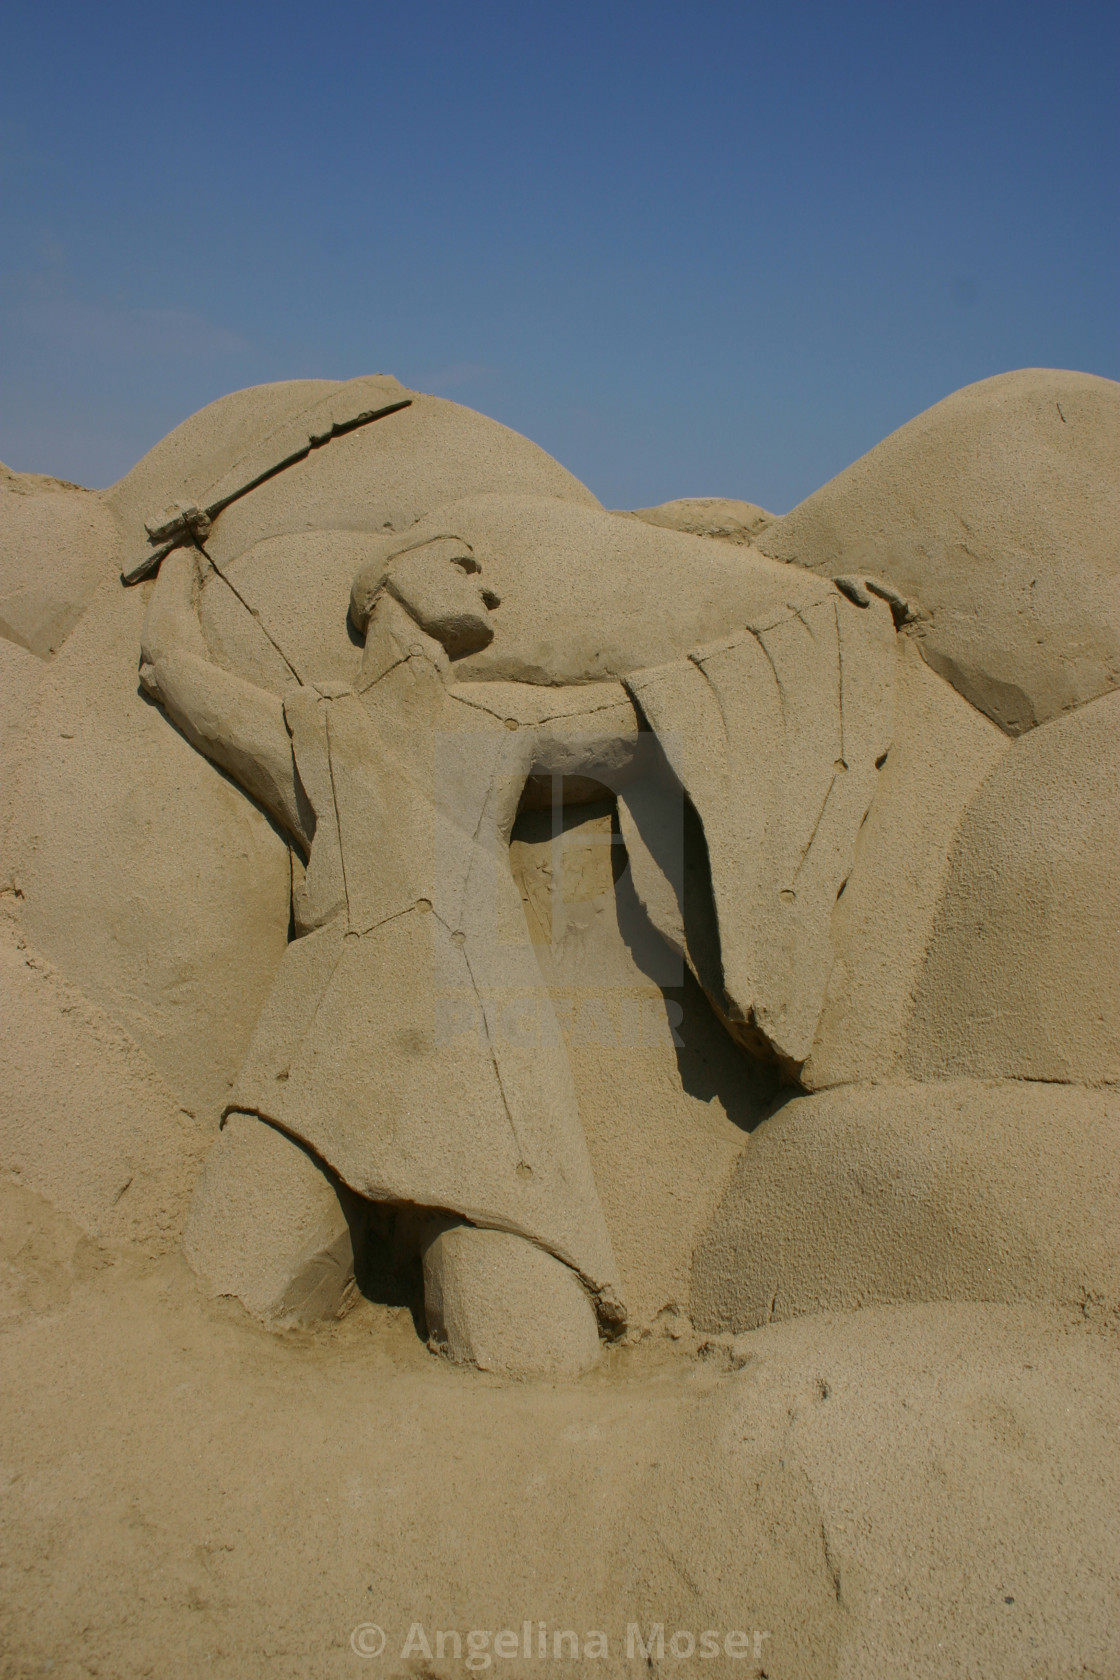 "Sand Sculpture" stock image